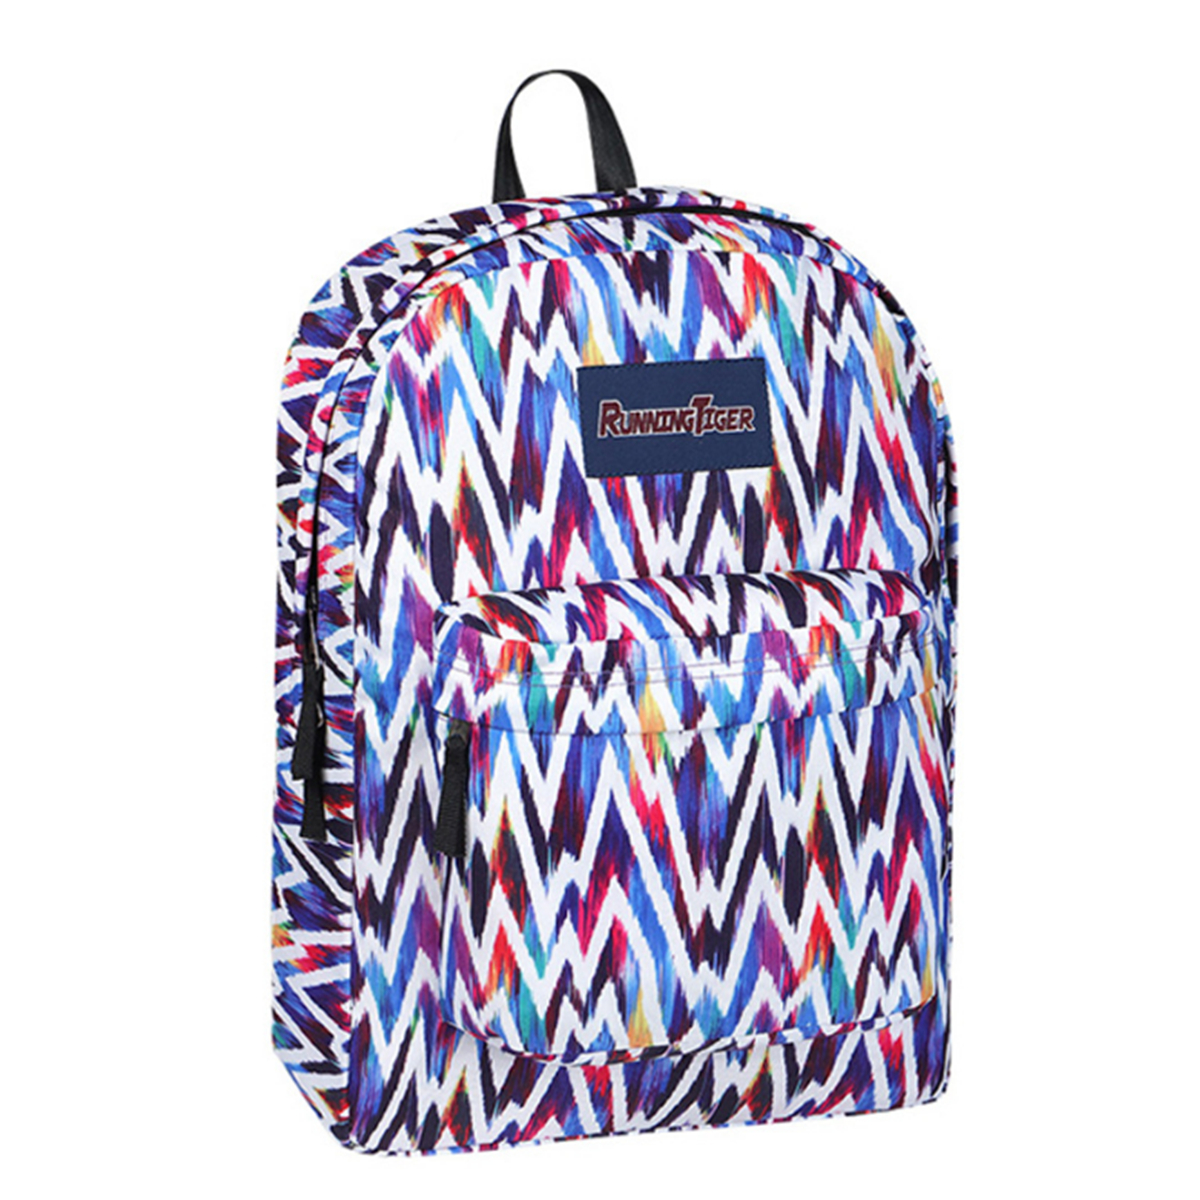 Outdoor-Backpack-Girl-School-Bag-Women-Laptop-Bag-Travel-Camping-Bag-1585844-8